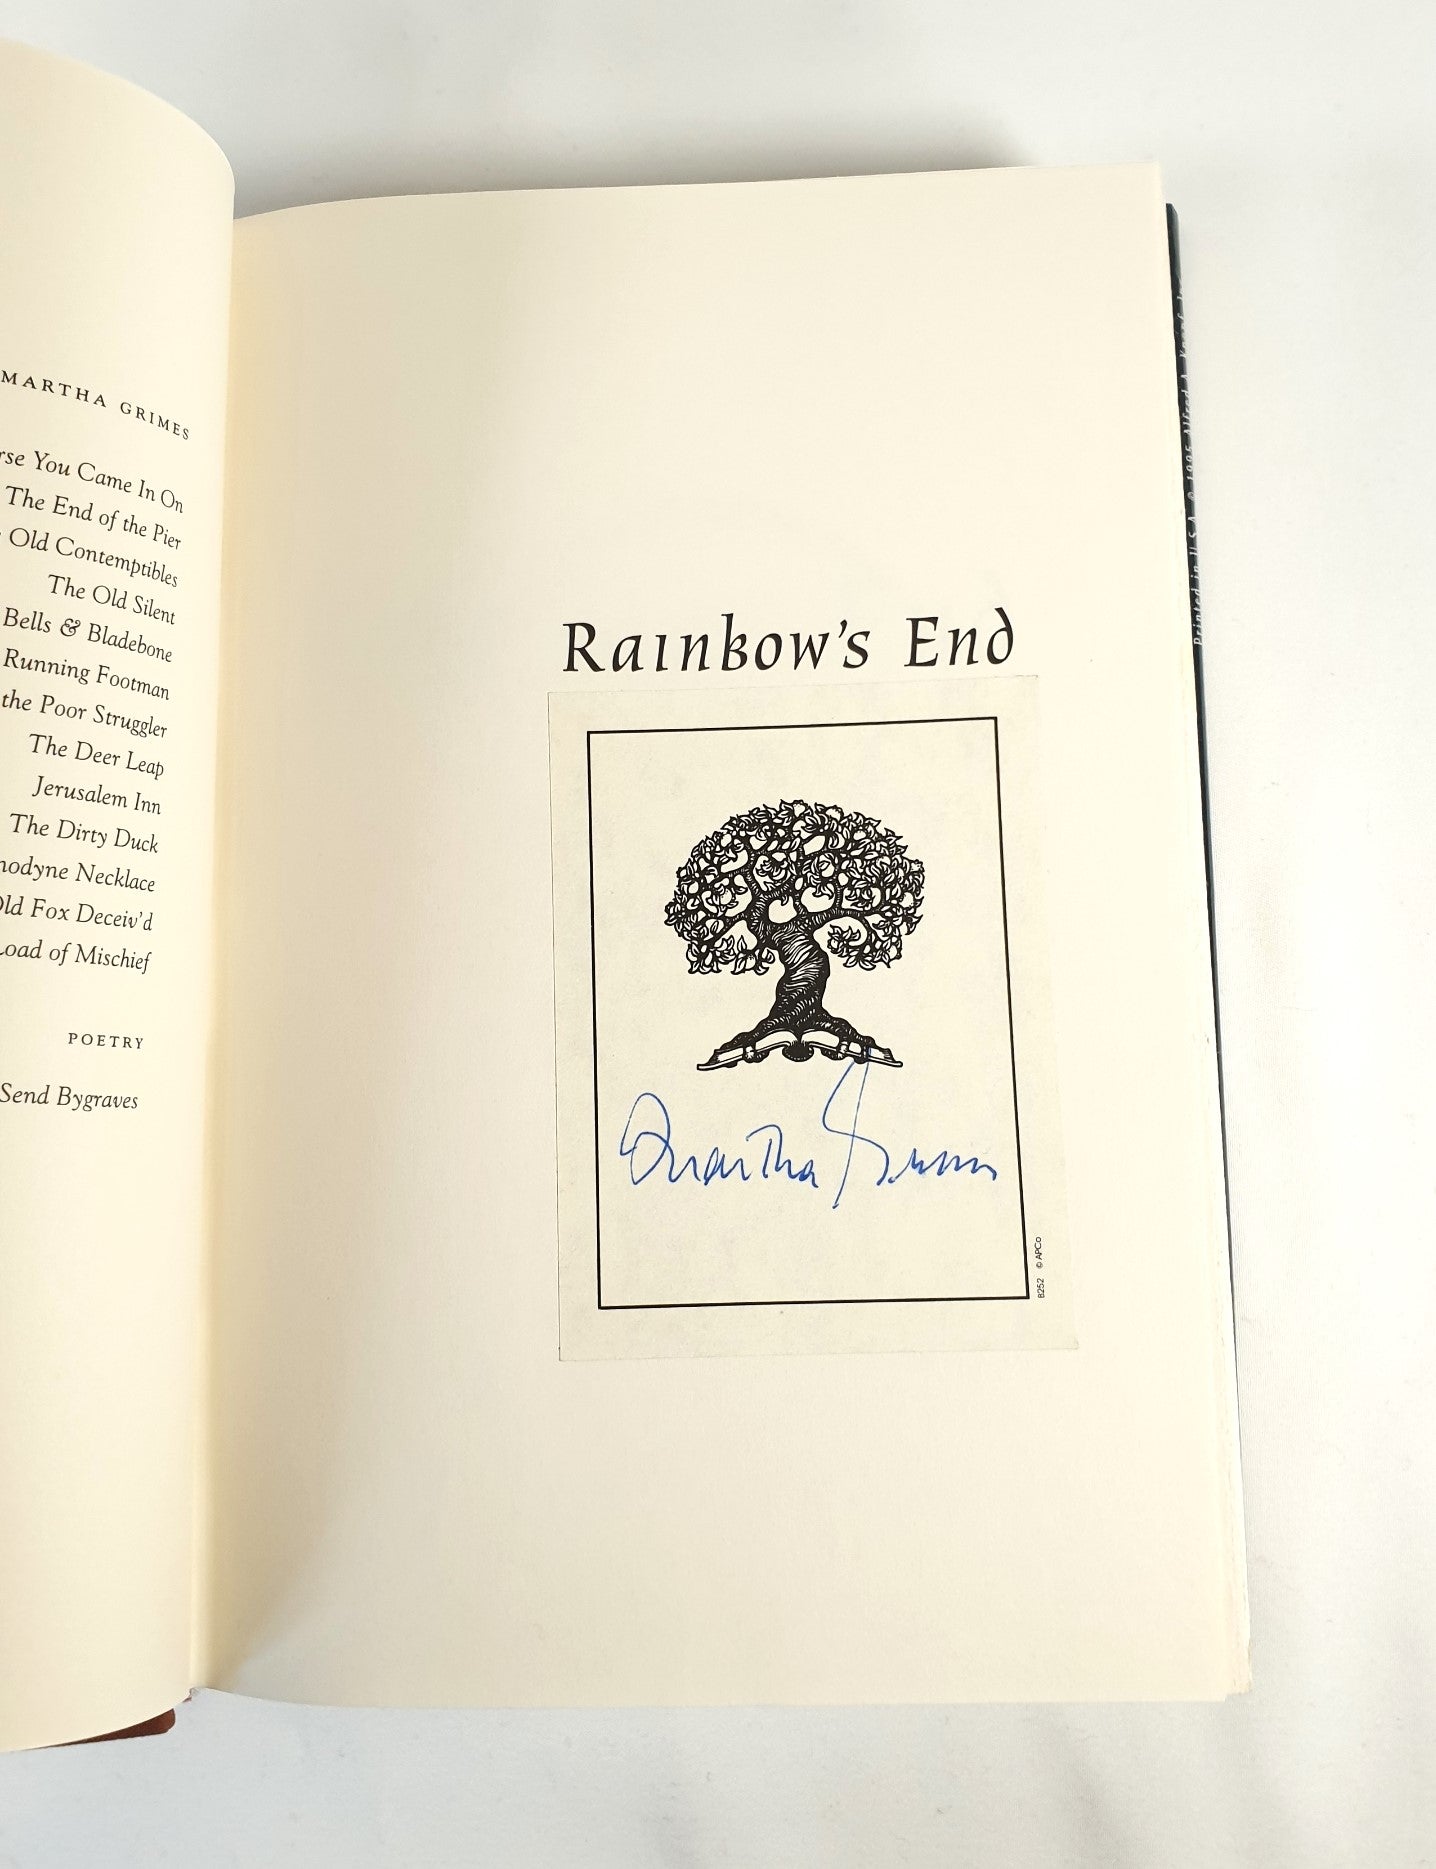 Grimes, Martha - Rainbow's End (Signed)